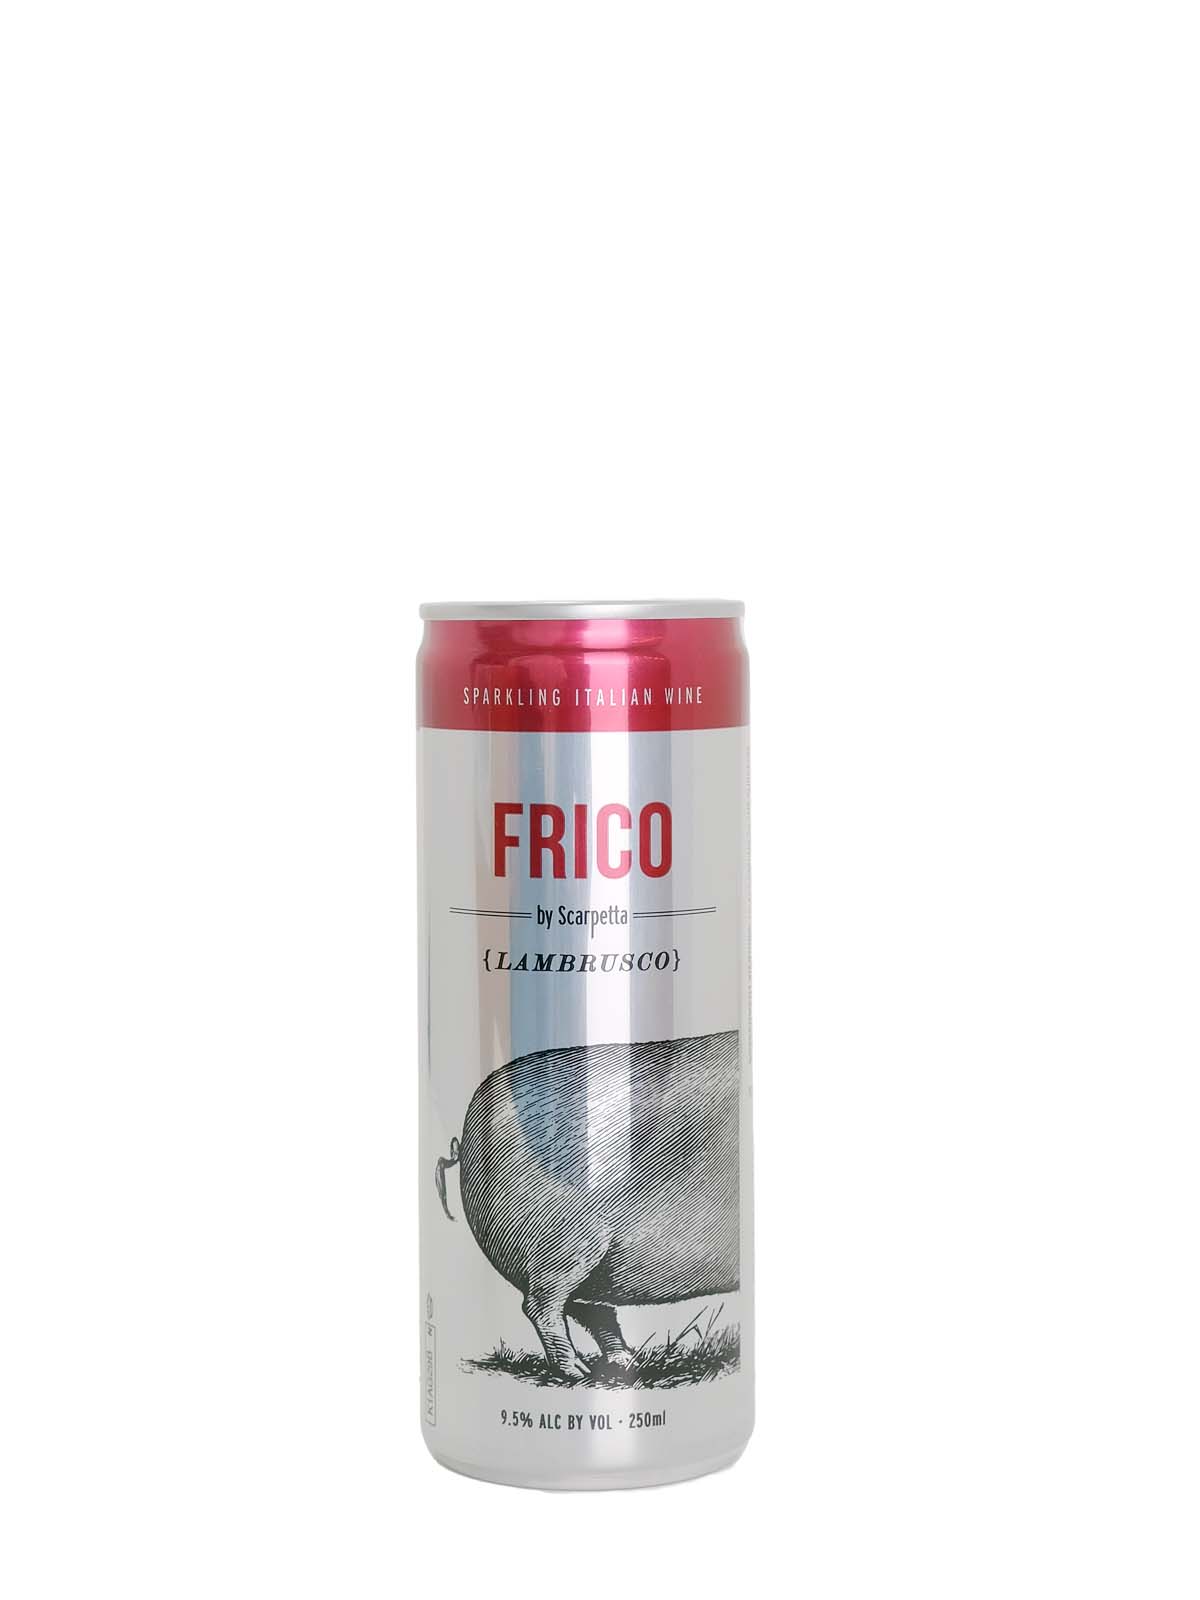 Scarpetta "Frico" Lambrusco 250ml Can (Fruili, IT) 